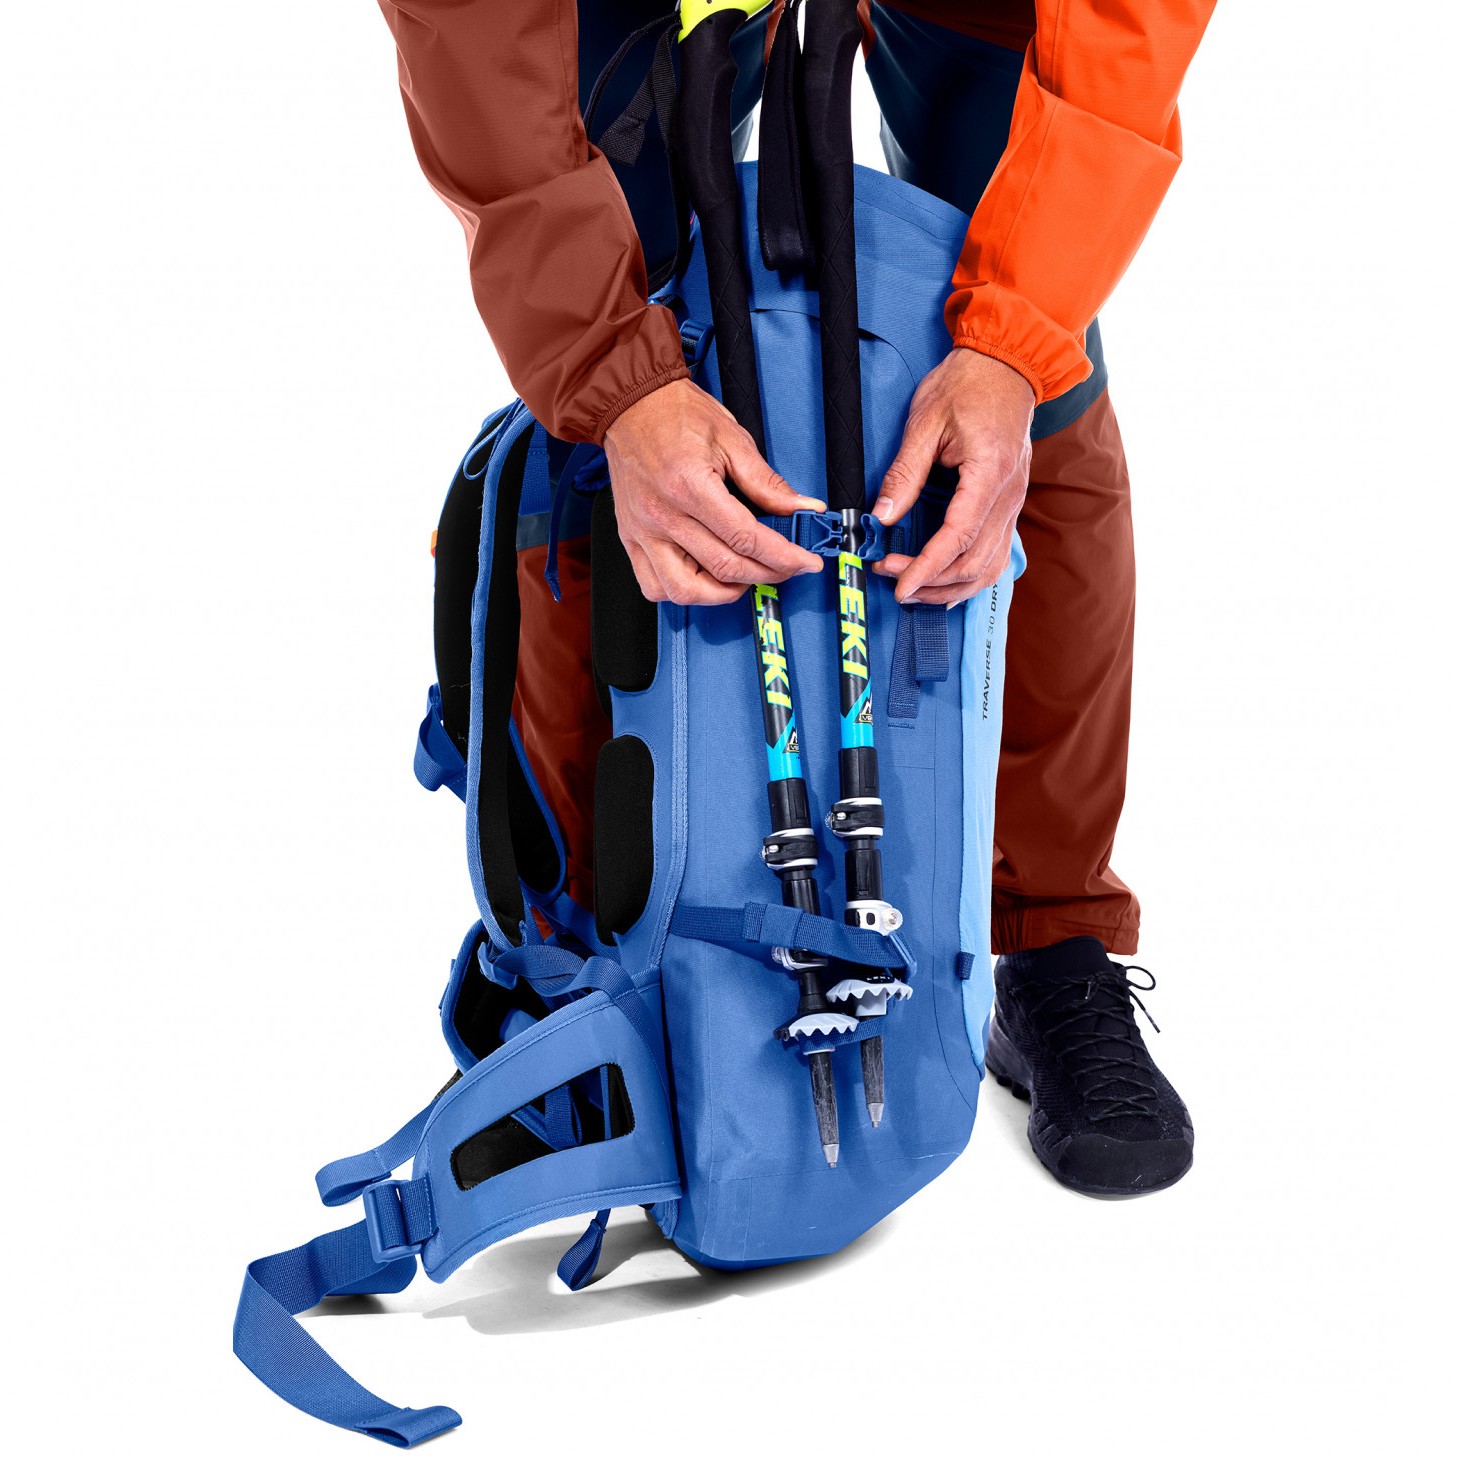 Ortovox Traverse 30 Alpine Mountaineering Backpack